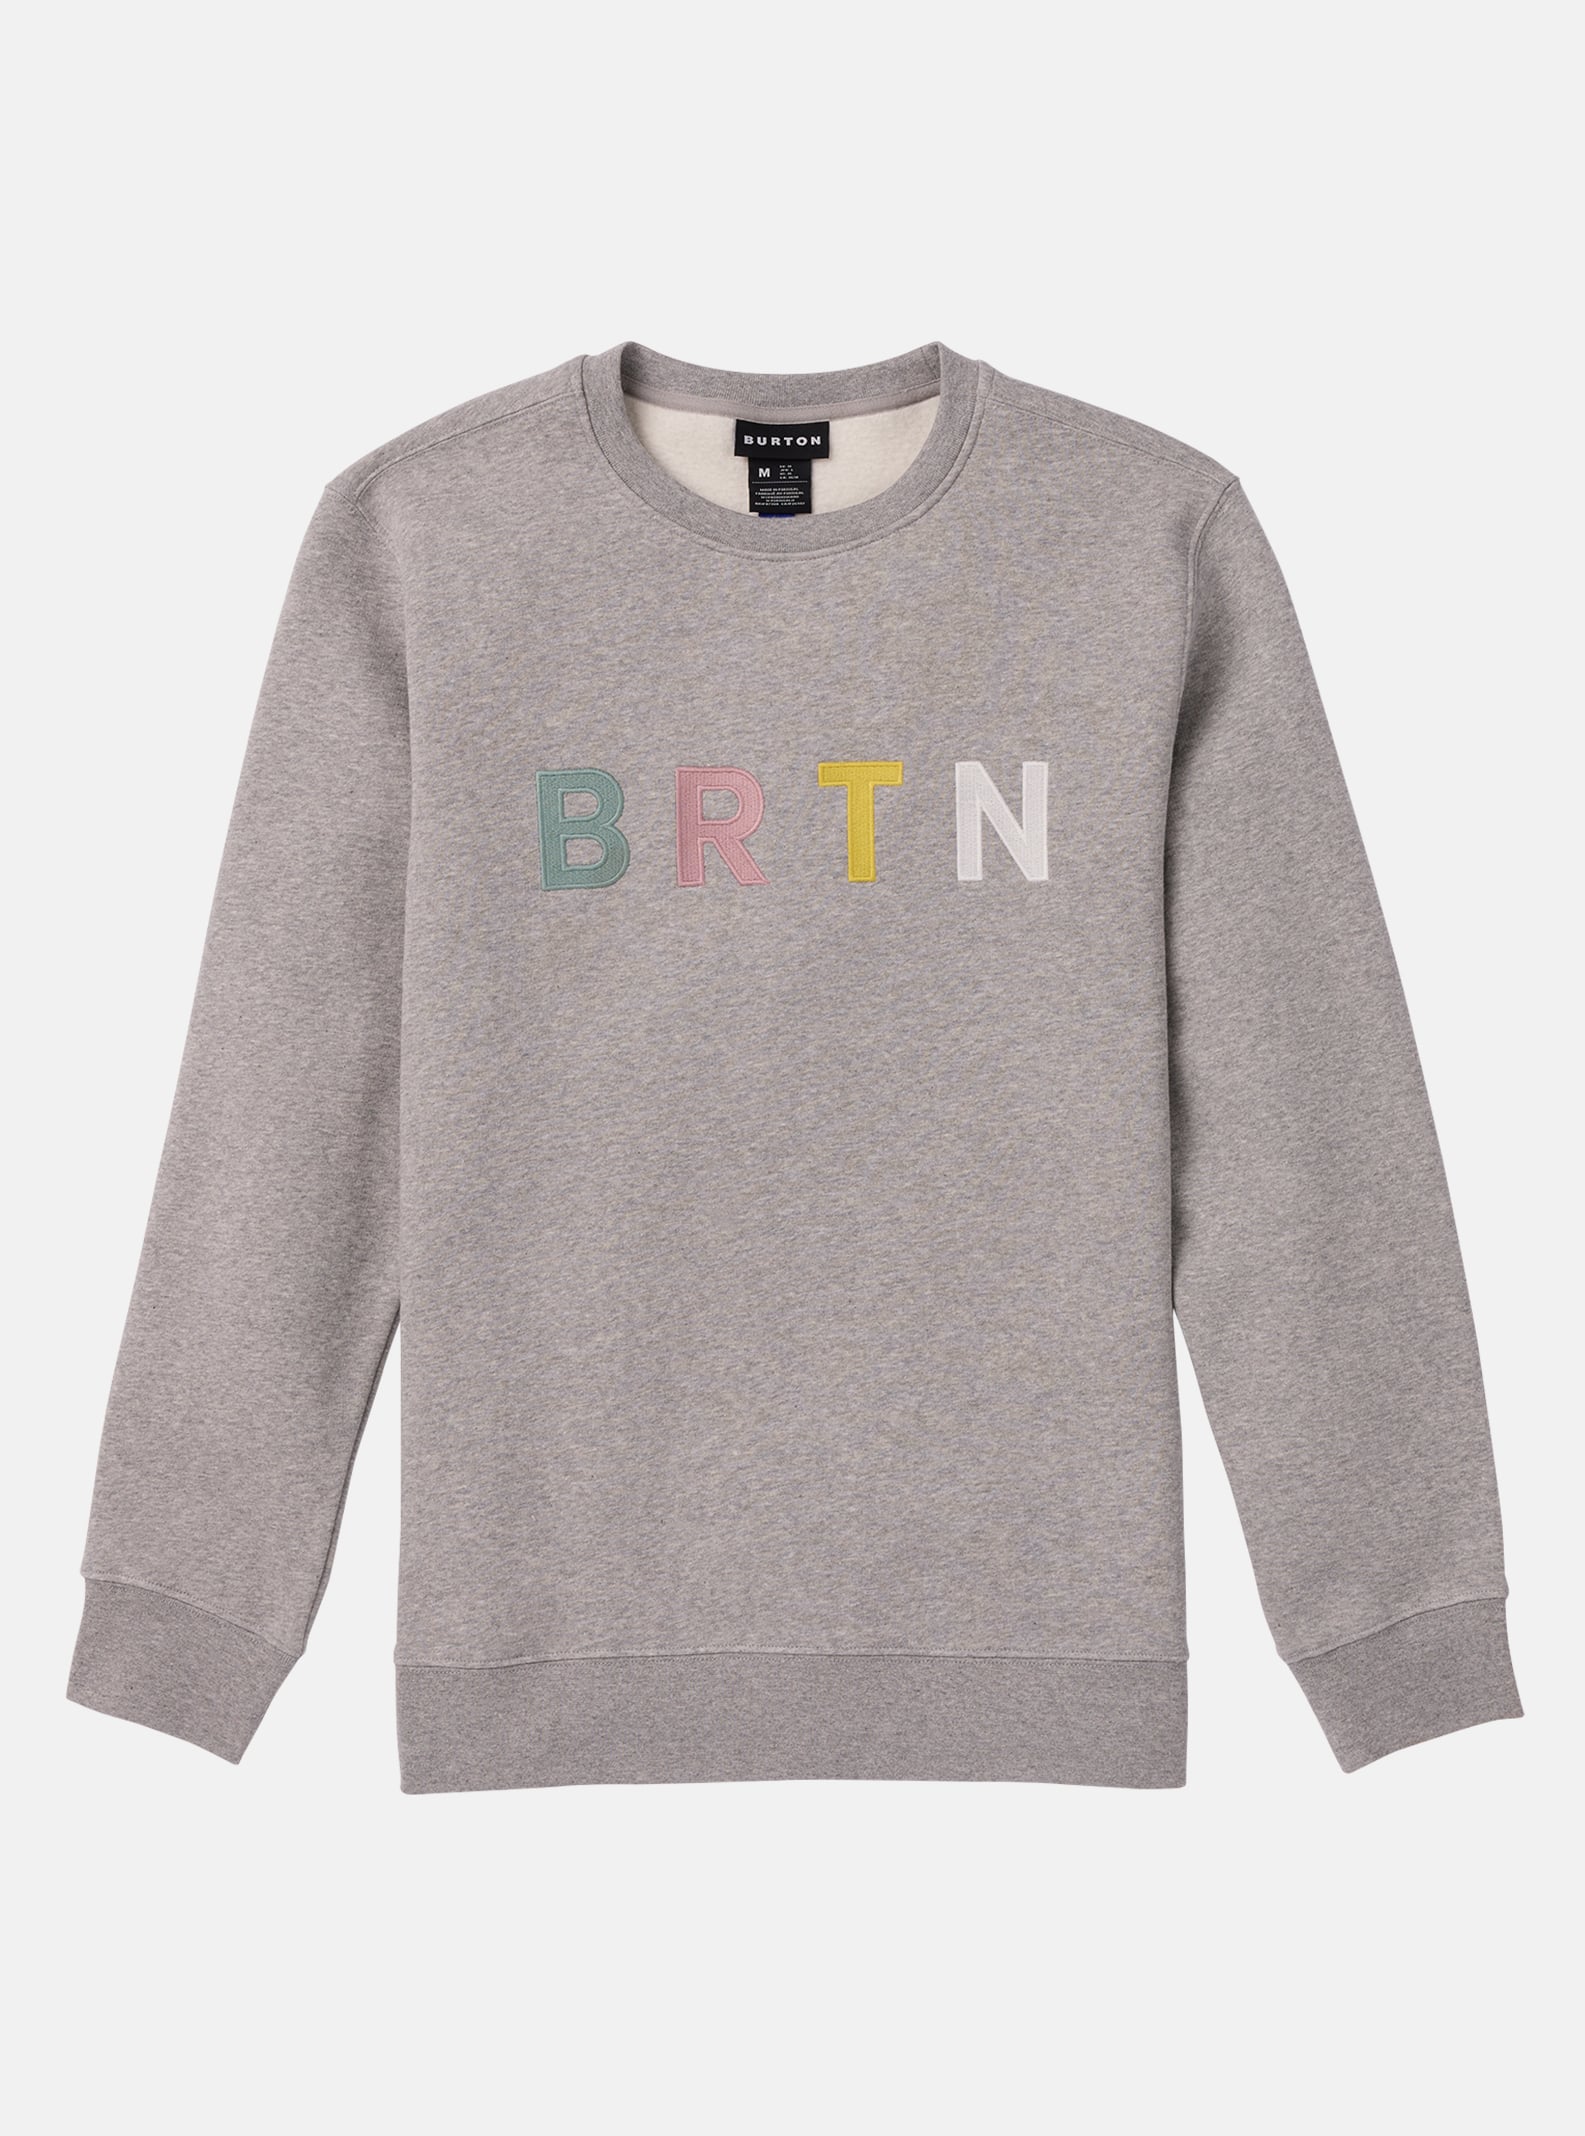 Burton Sweatshirt - BRTN Crewneck, Gray Heather Multi, XXS